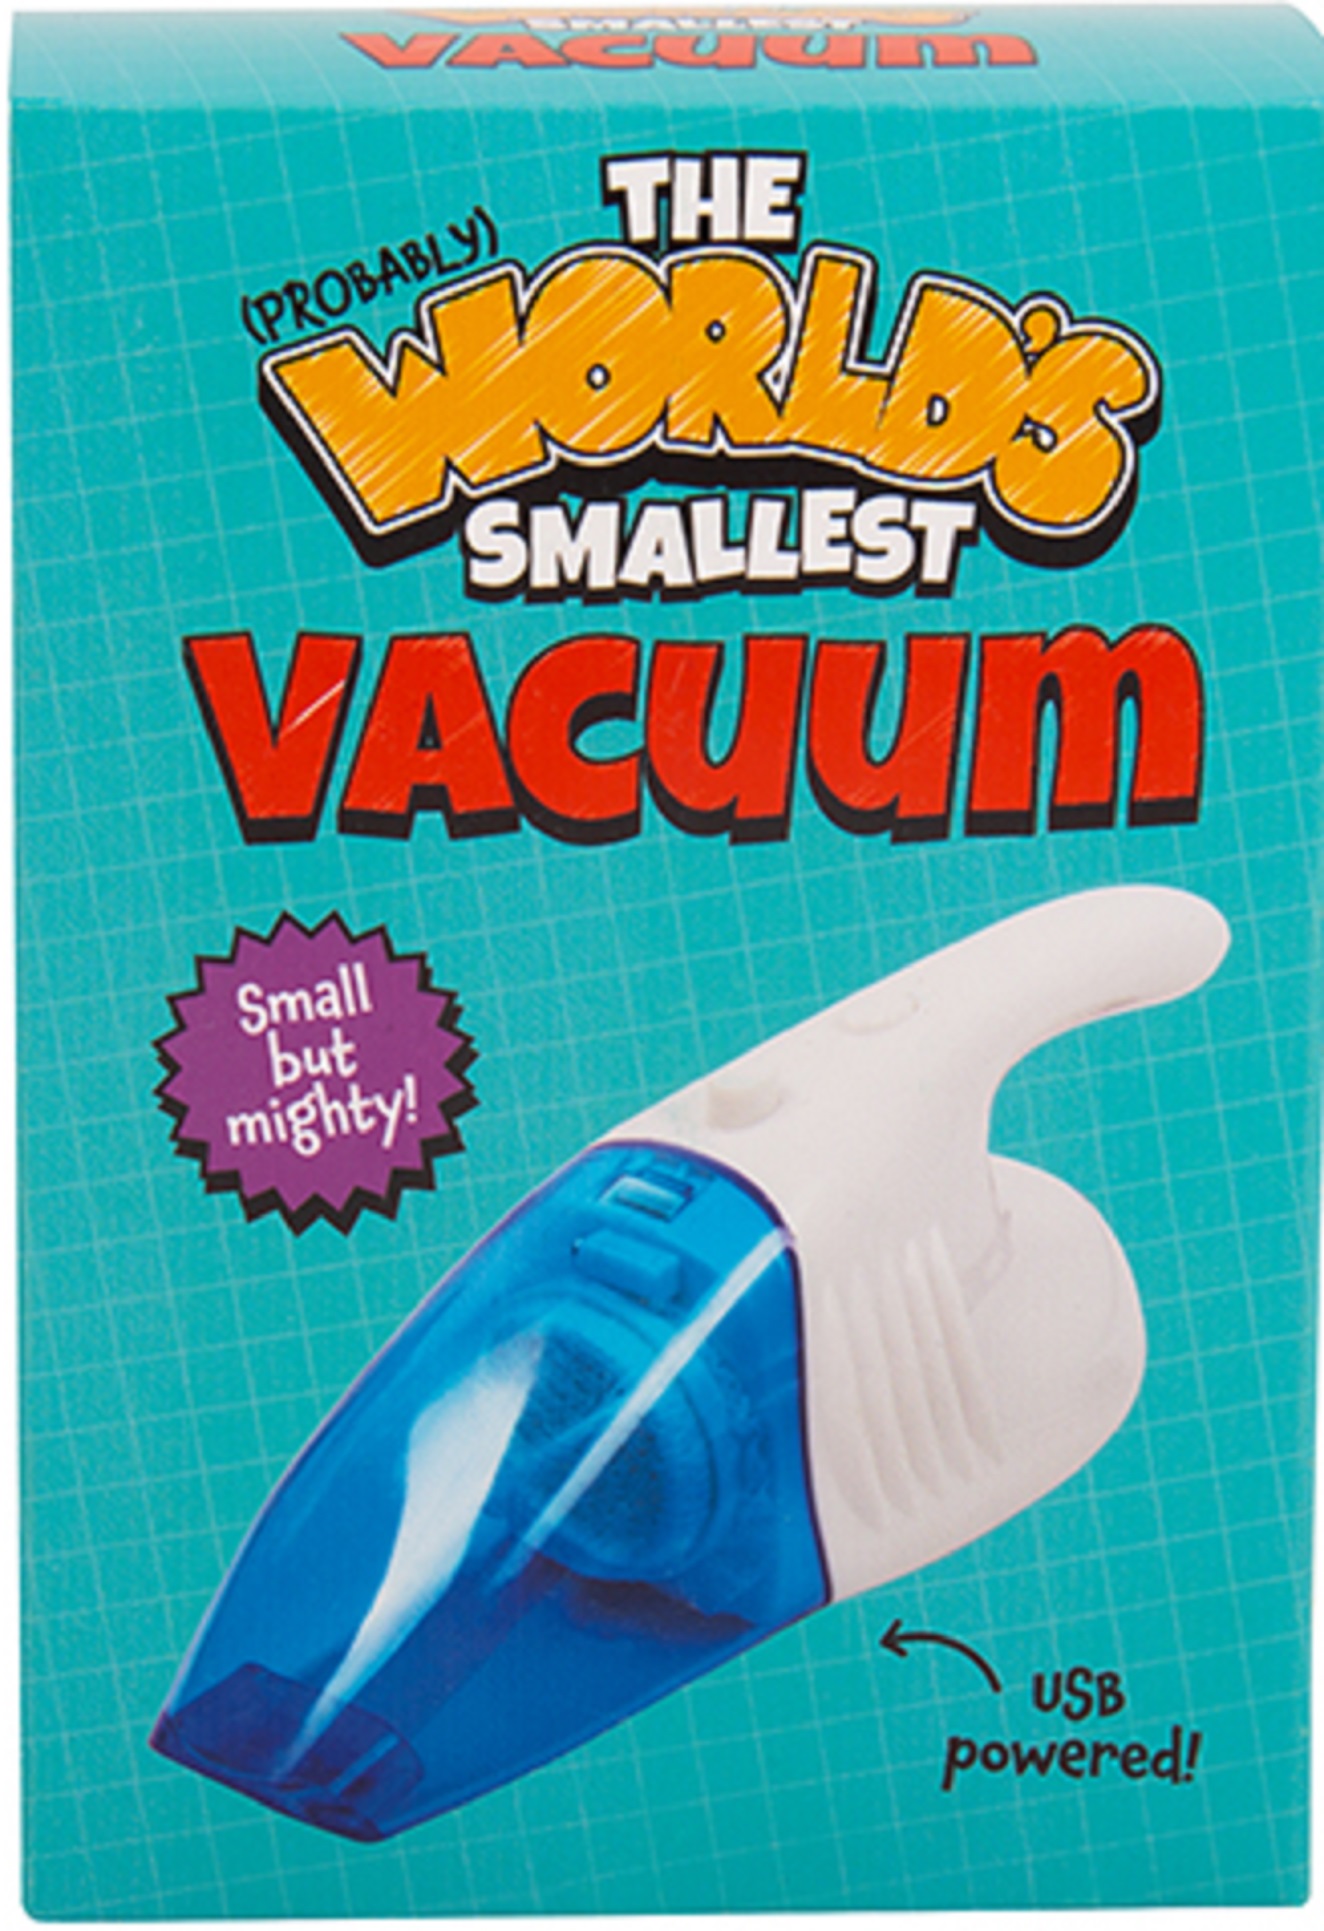 Mini-aspirator - World’s Smallest Vacuum